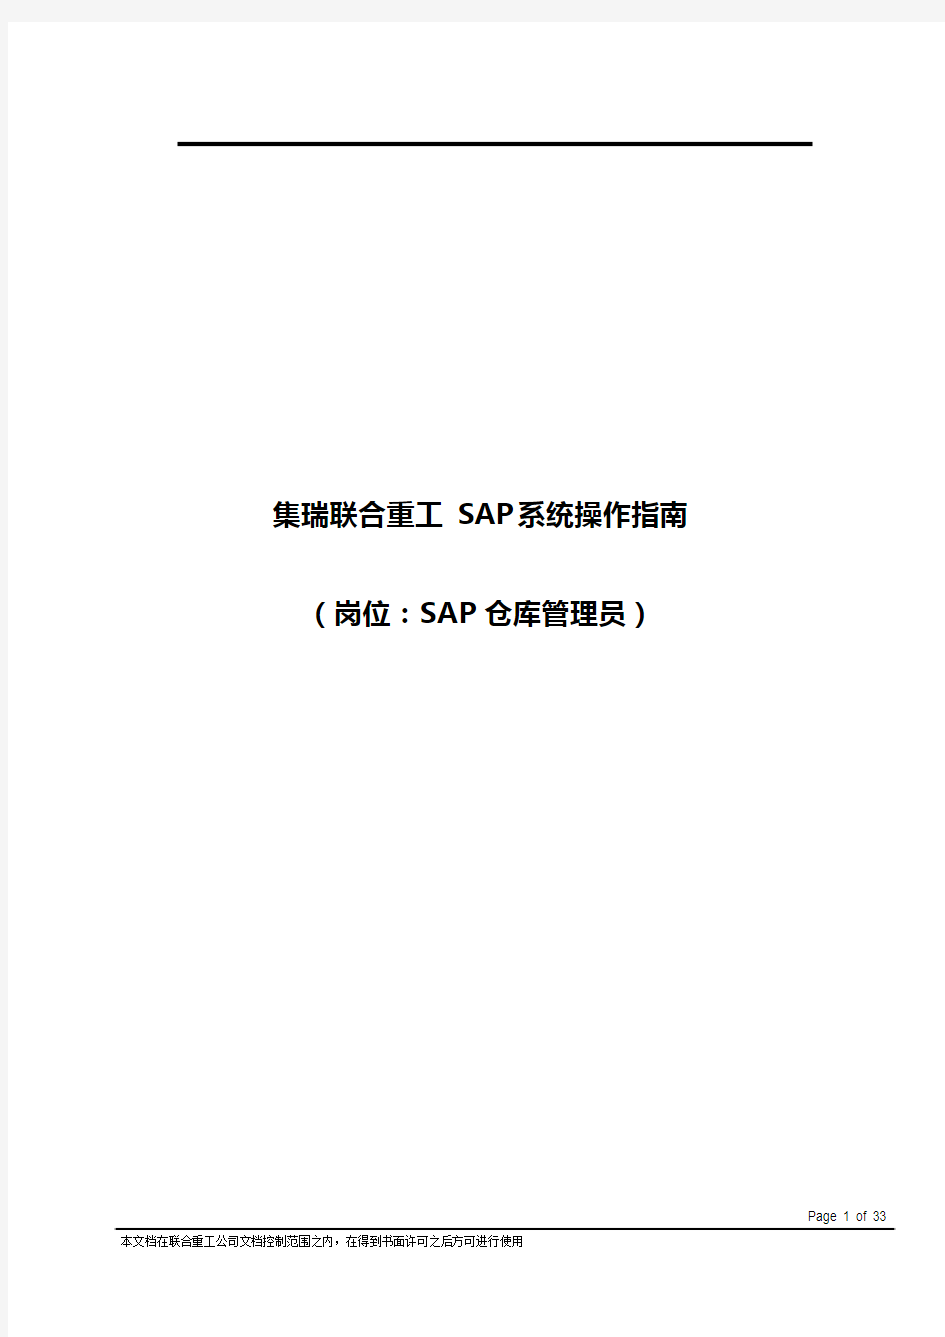 ERP系统操作指南(SAP仓库管理员岗位)